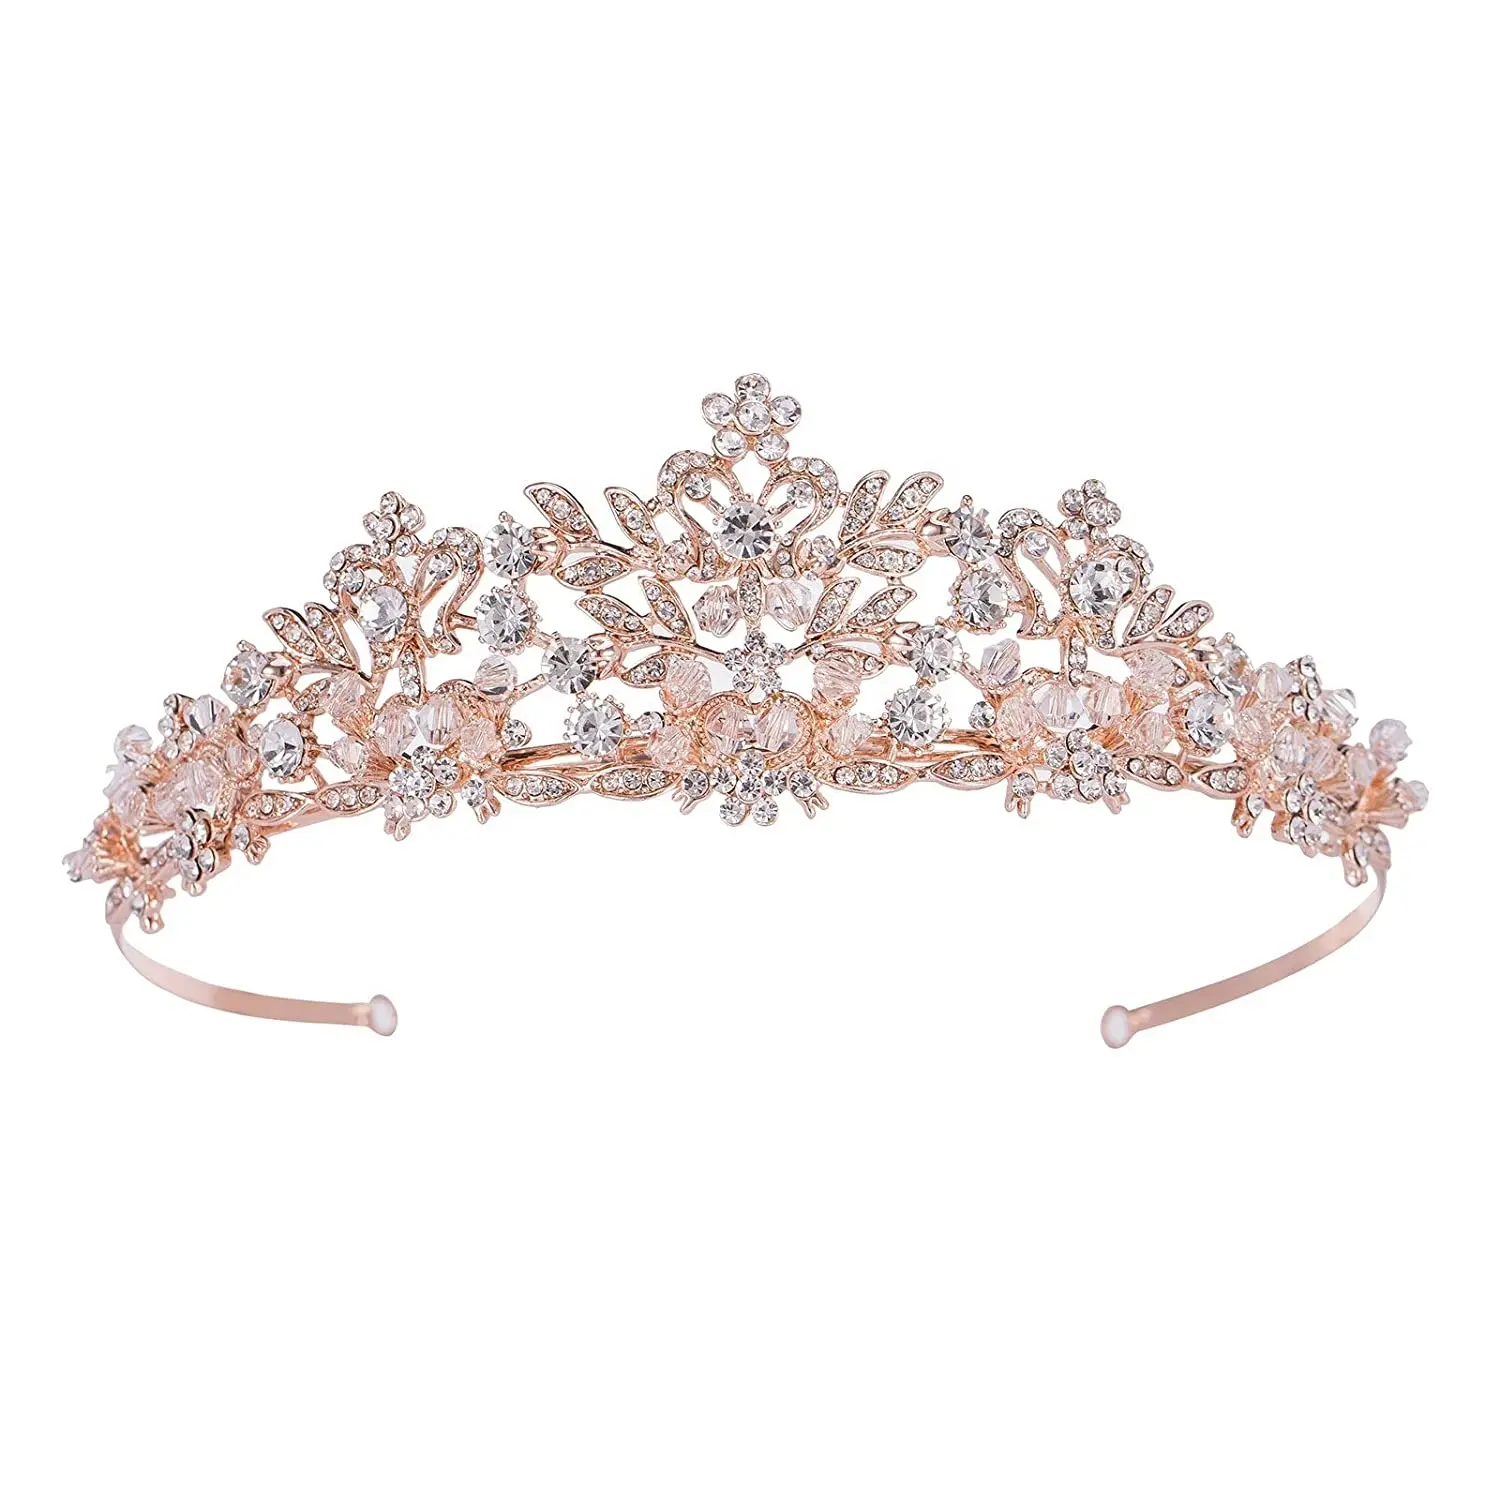 Finestyle Rose Gold Wedding Tiara for Women and Girls - Pageant Tiara Headband, Rhinestone Bridal Crown for Brides